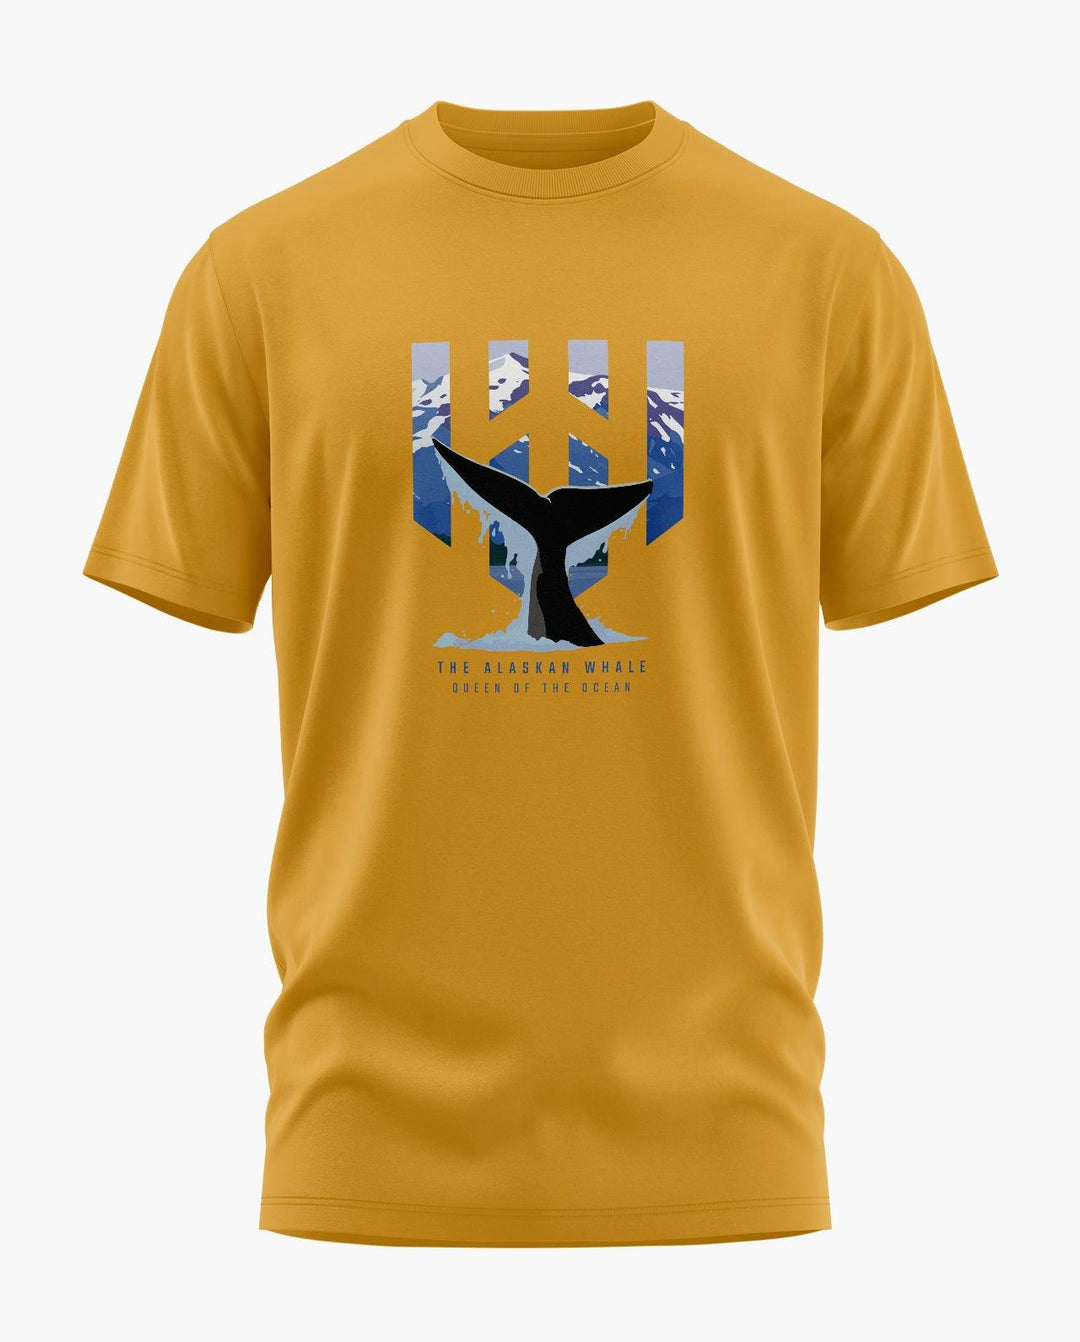 Alaskian Whale T-Shirt - Aero Armour